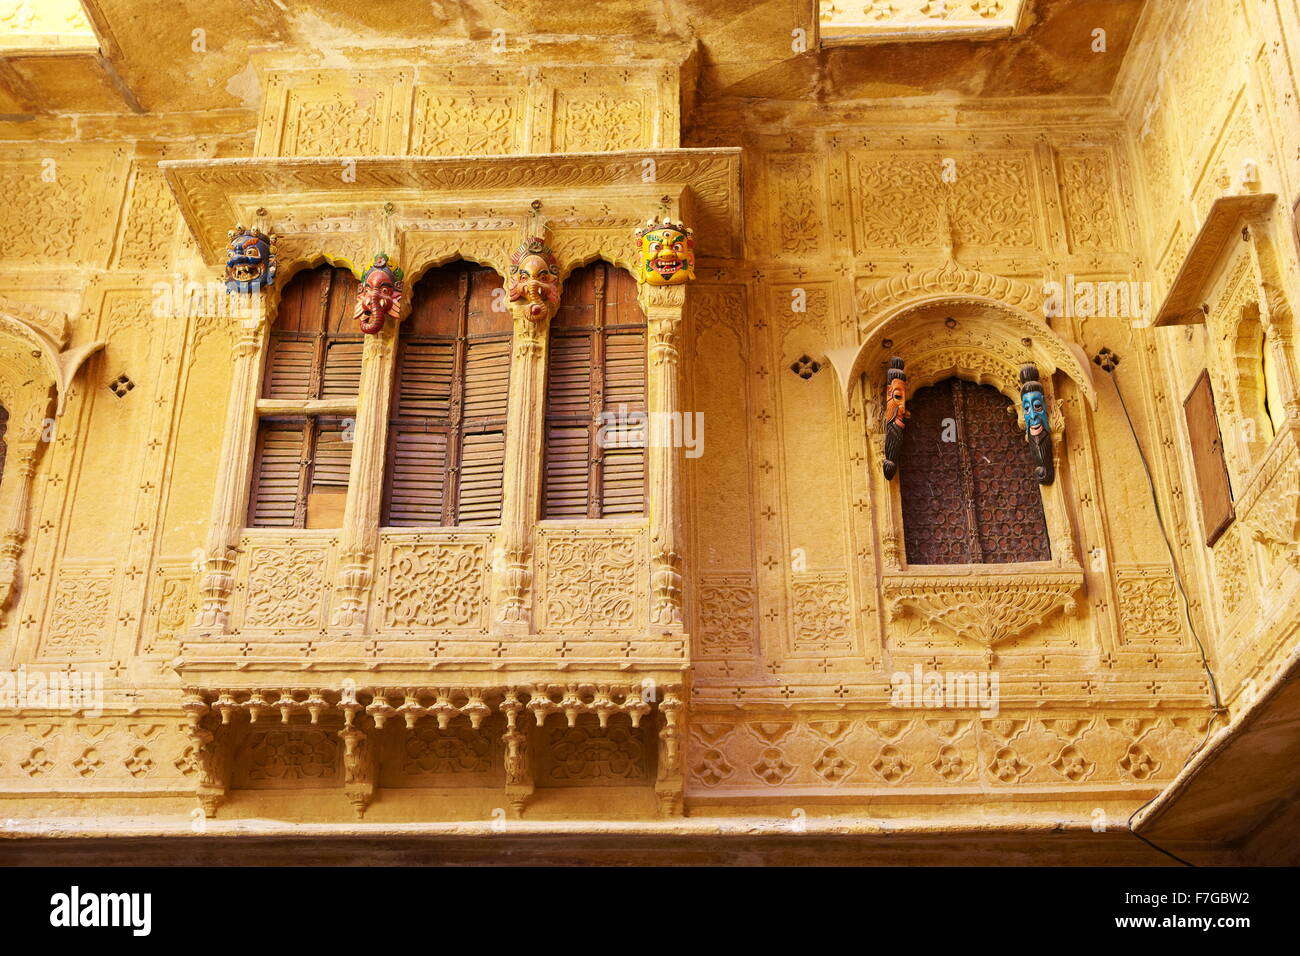 Tradizionale in pietra arenaria scolpita interno del vecchio Jaislamer haveli (mansion) in Jaisalmer, Rajasthan, India Foto Stock